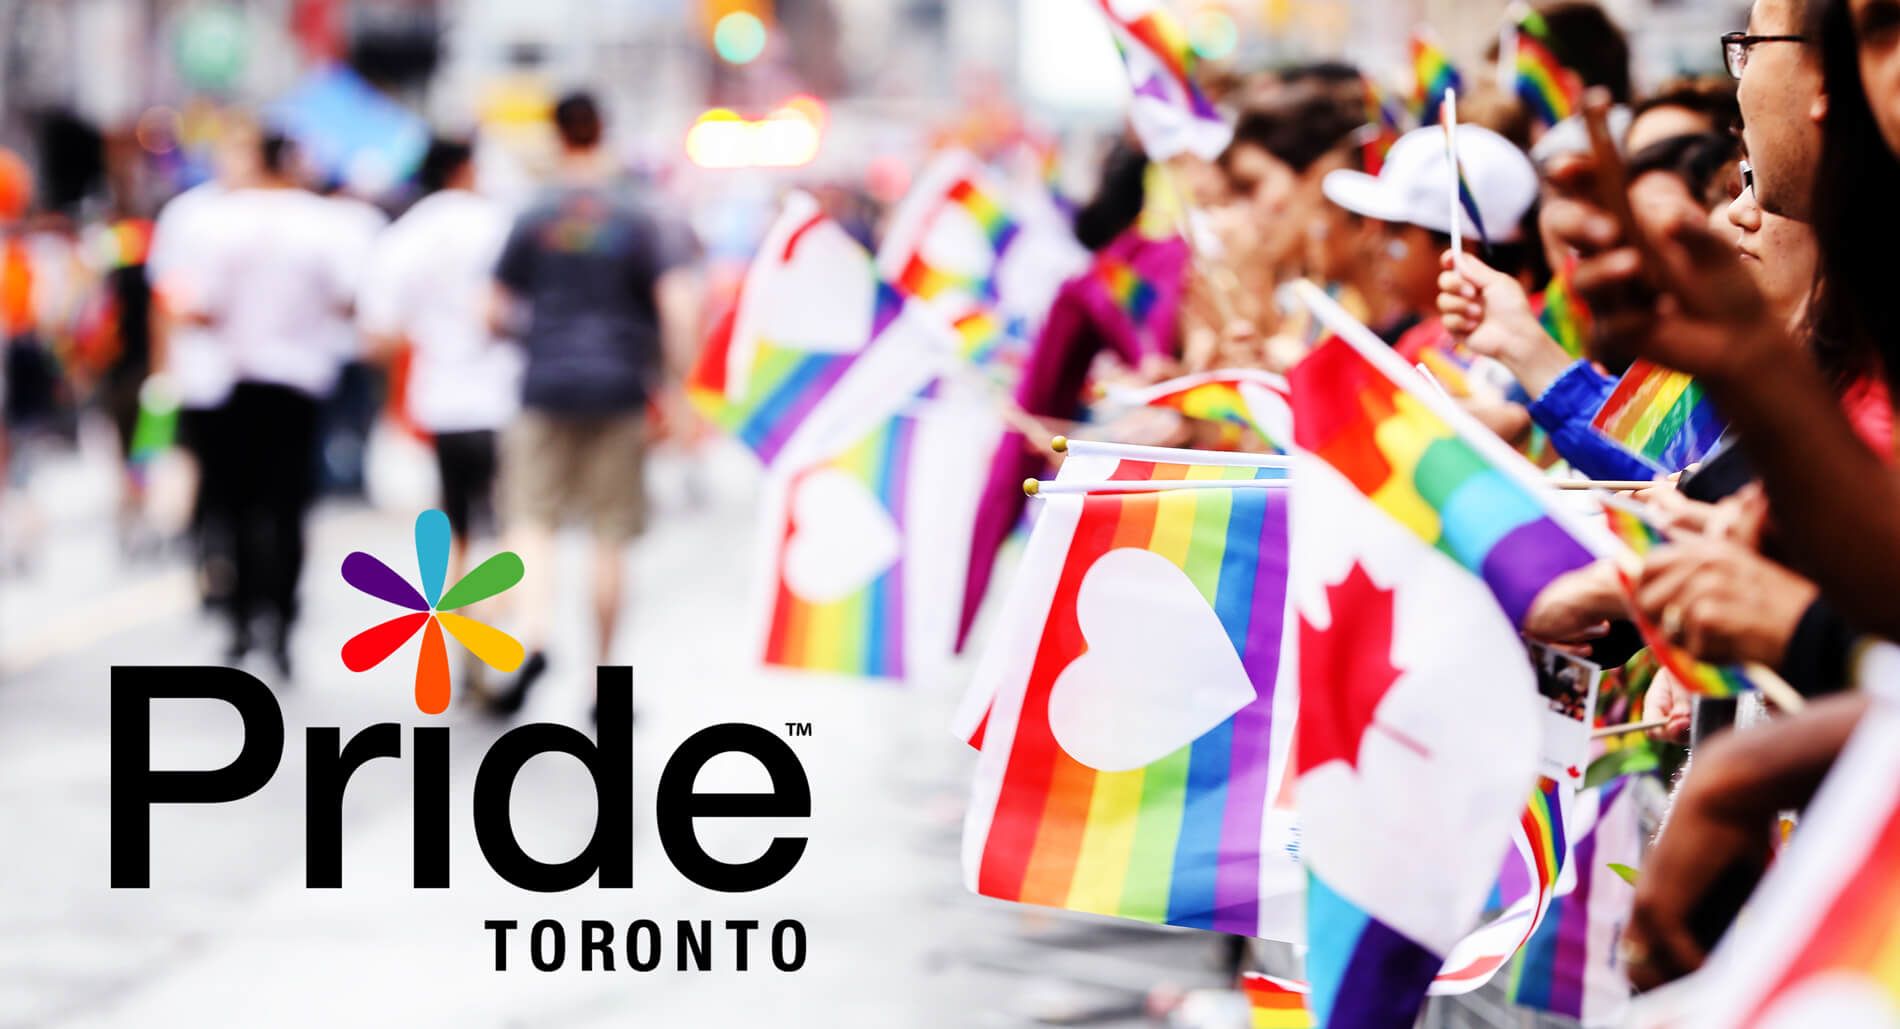 Pride Toronto members vote against allowing uniformed police in parade